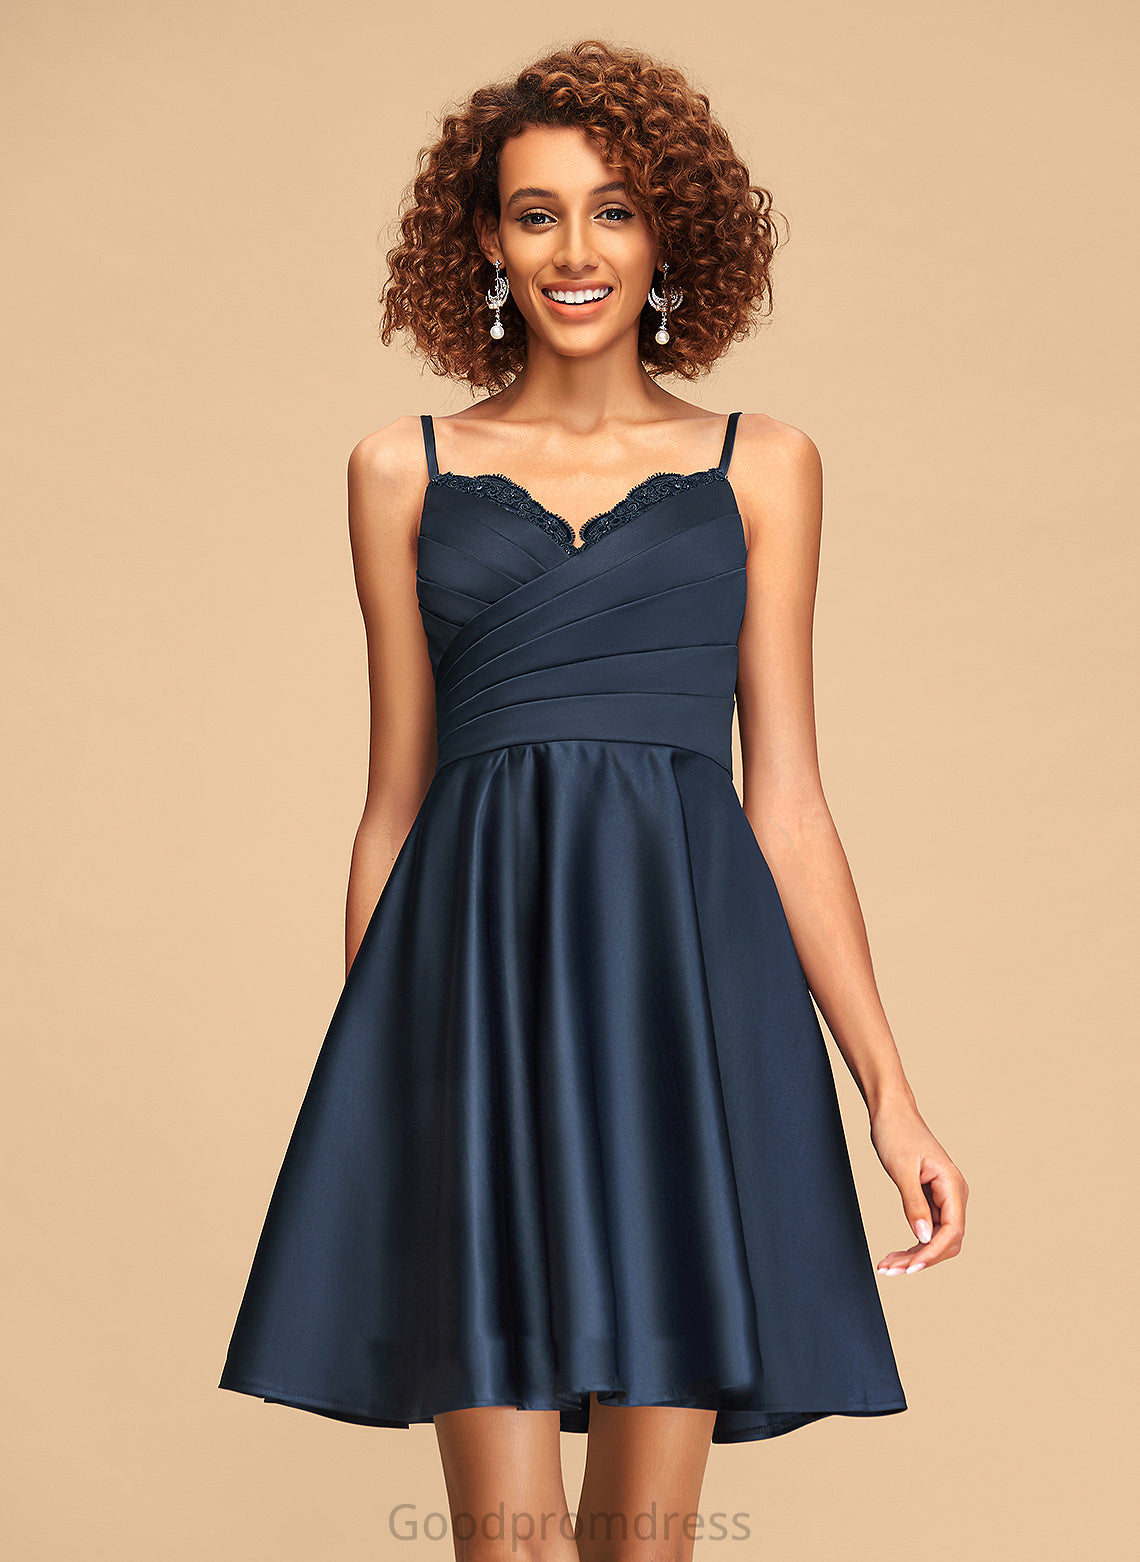 Beading Sequins Satin Ruffle Dress Short/Mini With Homecoming Homecoming Dresses A-Line V-neck Jemima